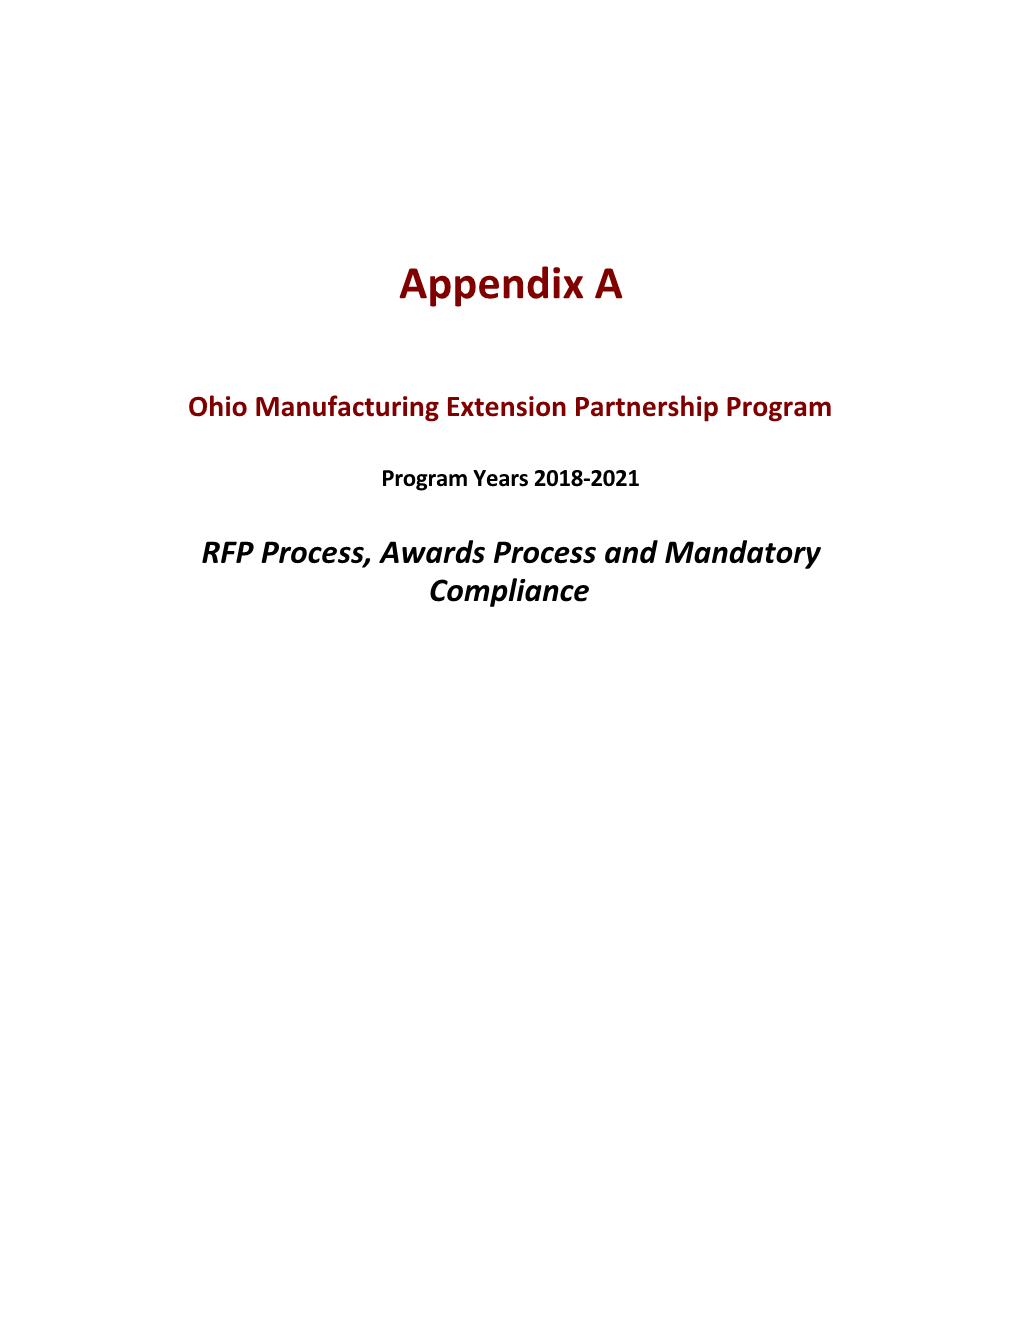 Ohio Manufacturing Extension Partnership Program